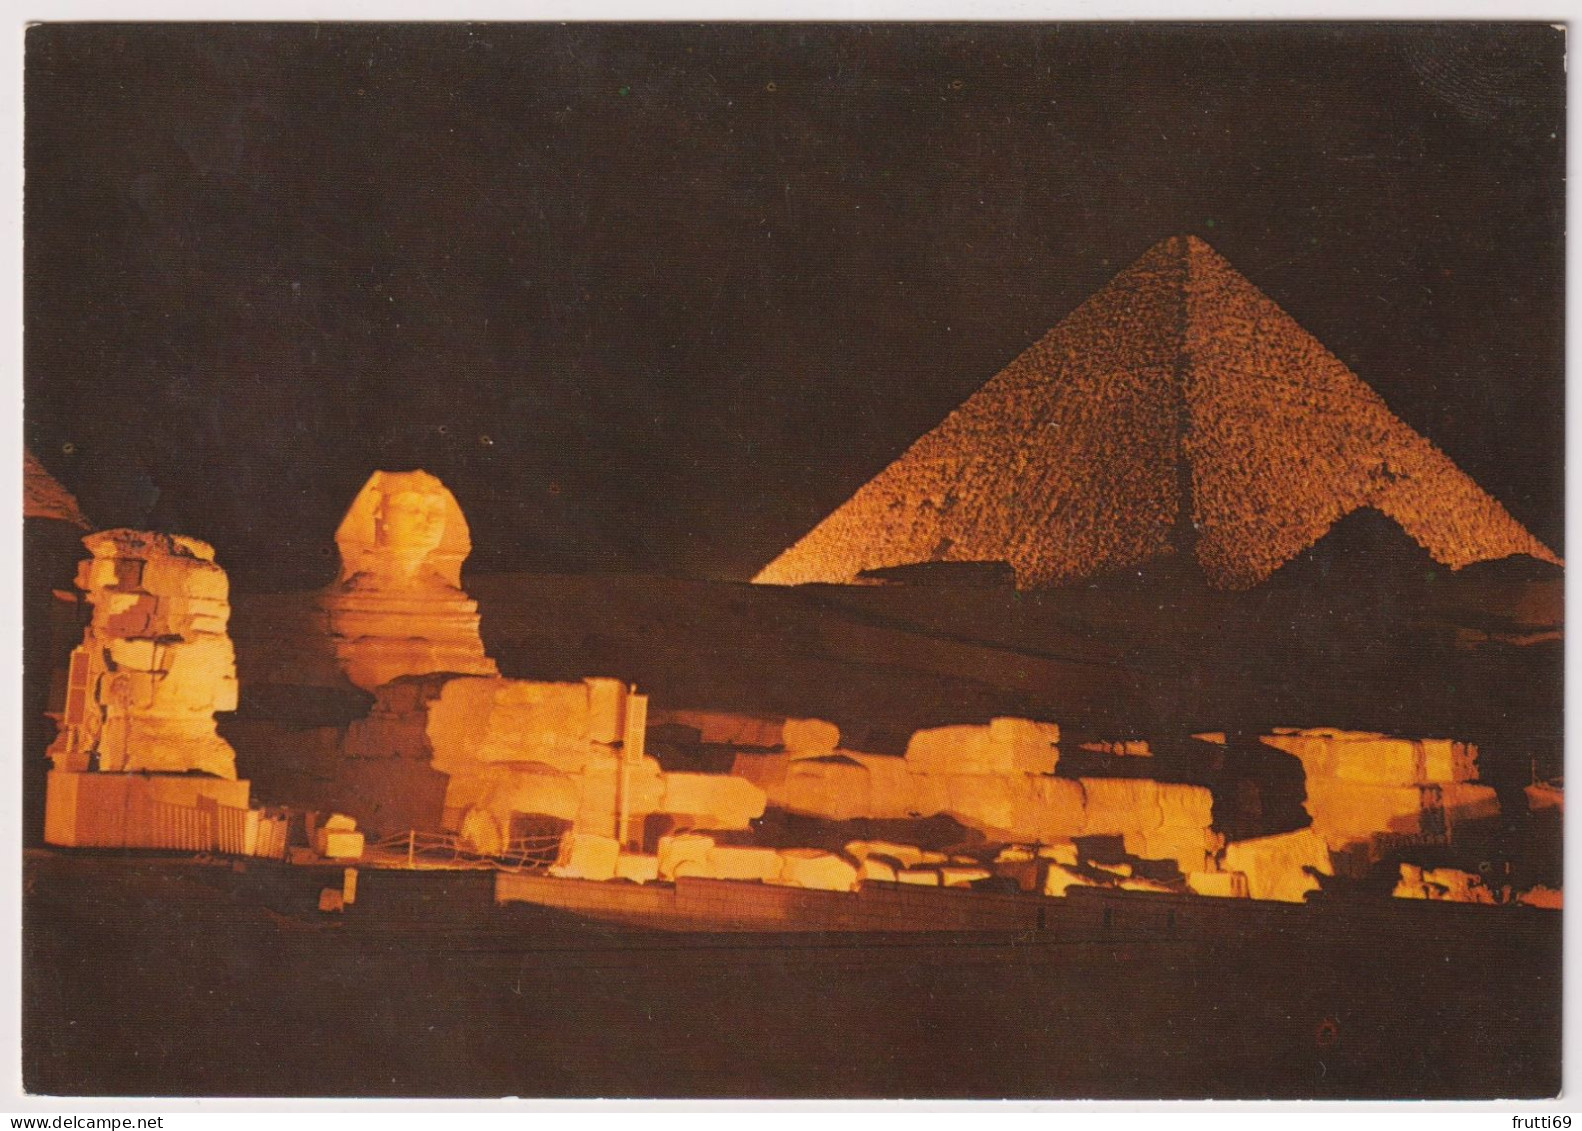 AK 198185 EGYPT - Giza - Sound And Light At The Pyramids Of Giza - Piramidi